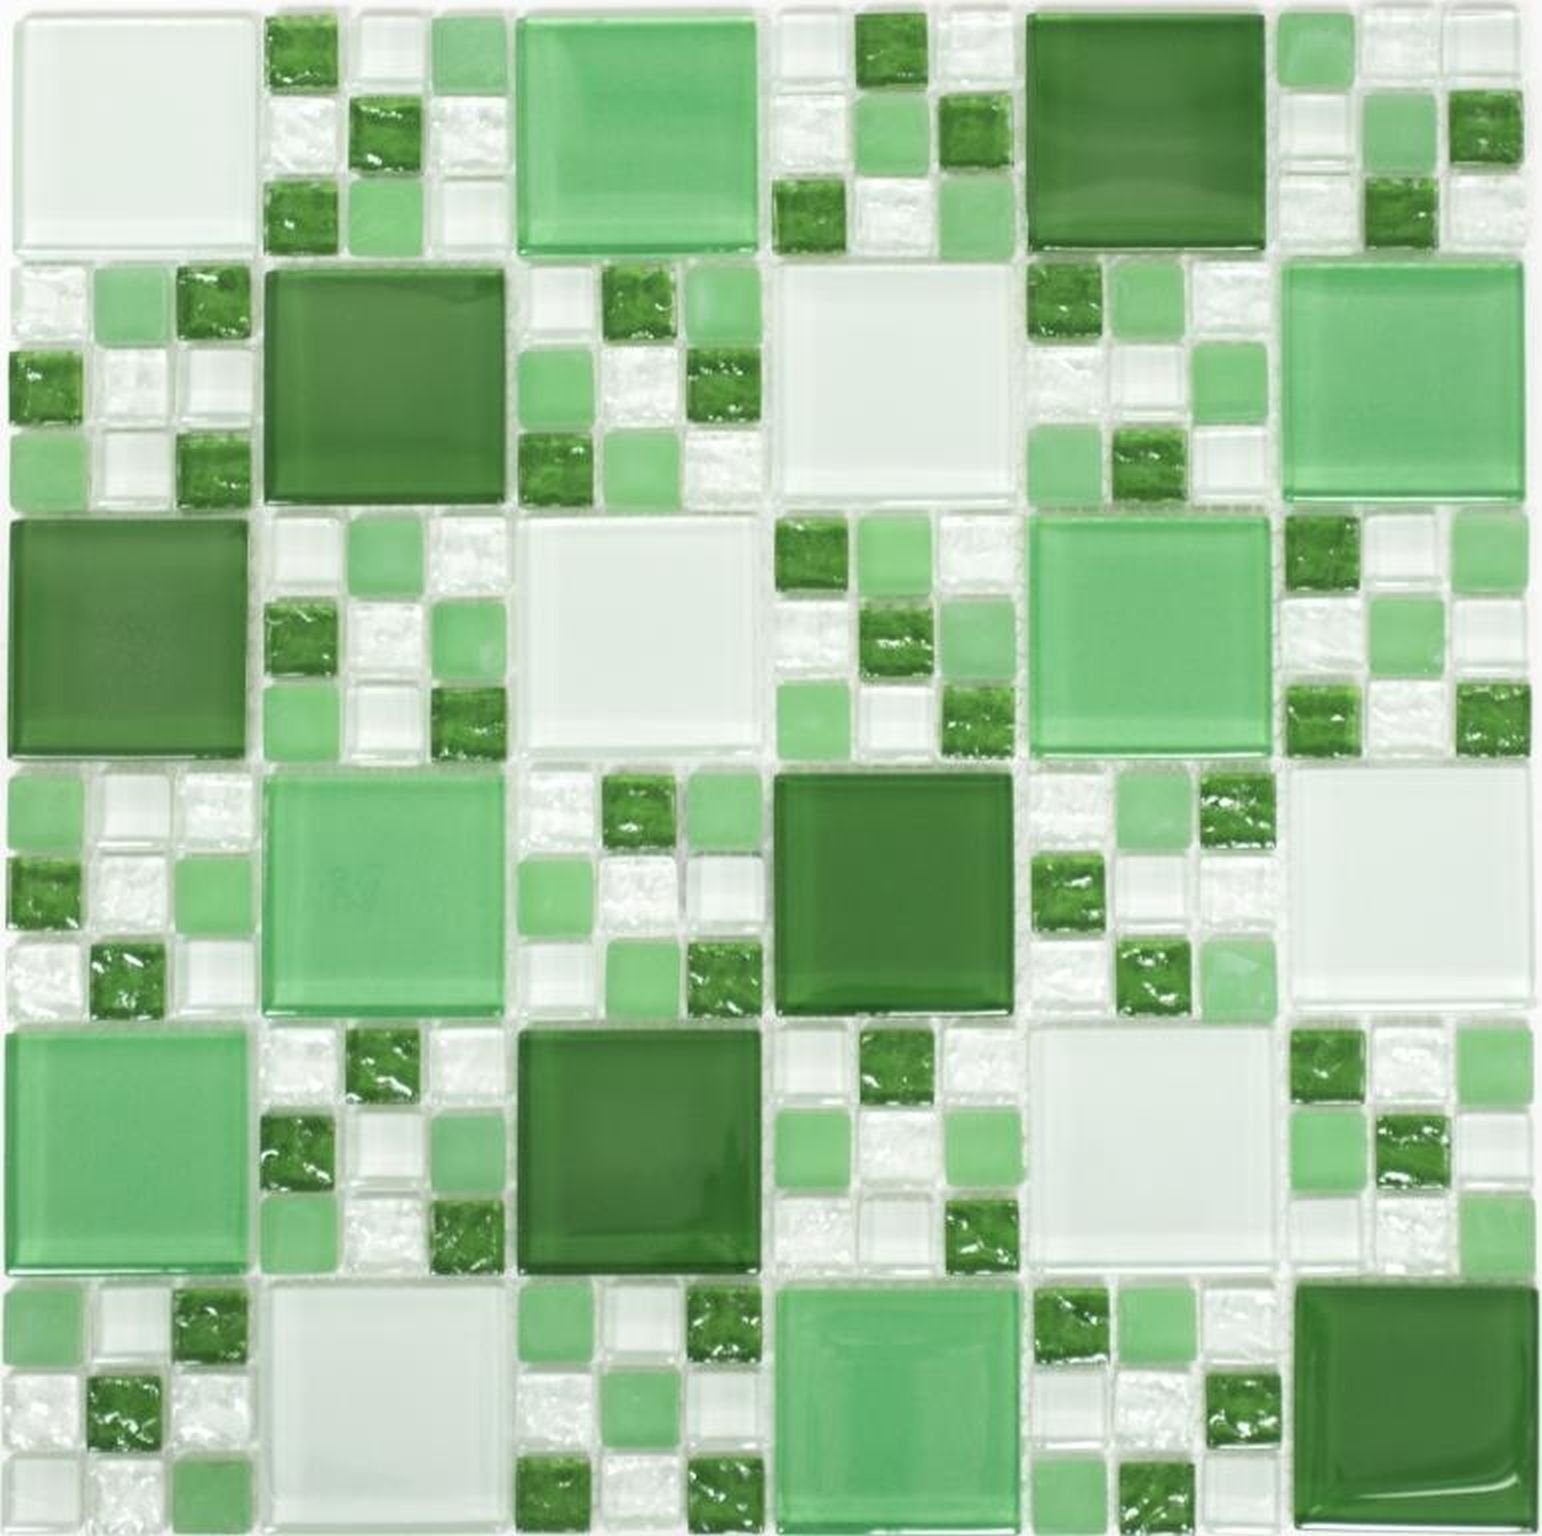 Mosani Mosaikfliesen Glasmosaik Mosaikfliesen Fliesenspiegel weiss grün